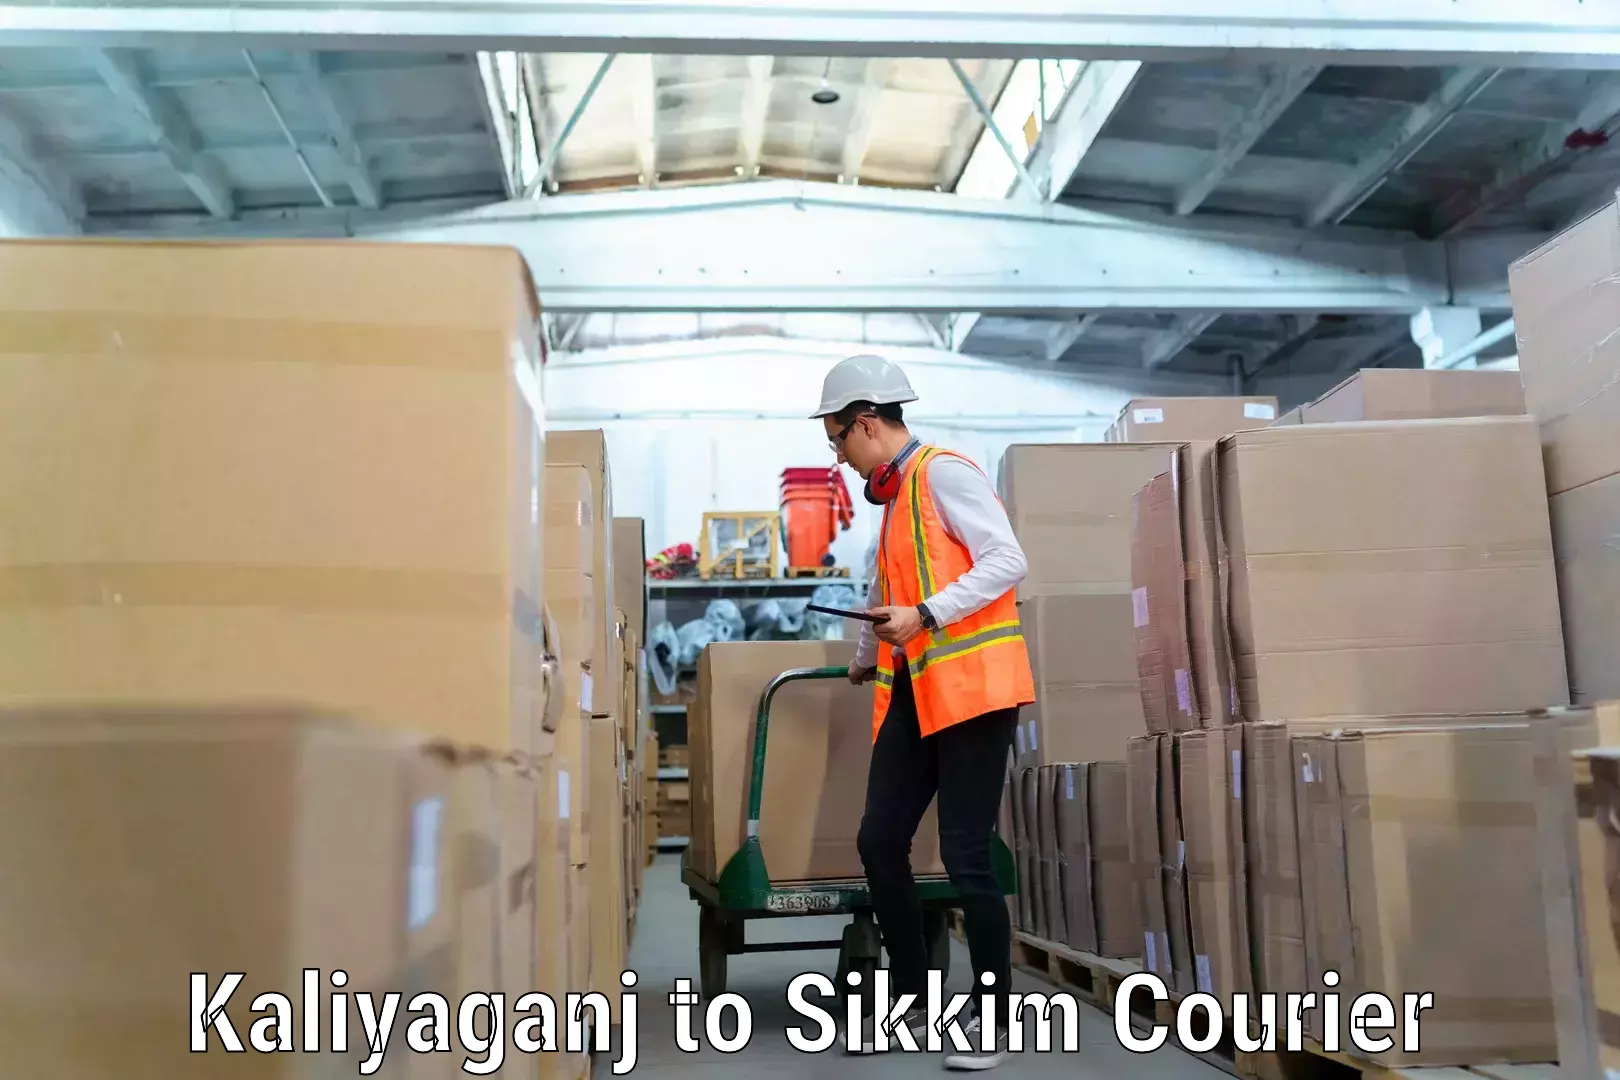 Furniture delivery service Kaliyaganj to Sikkim